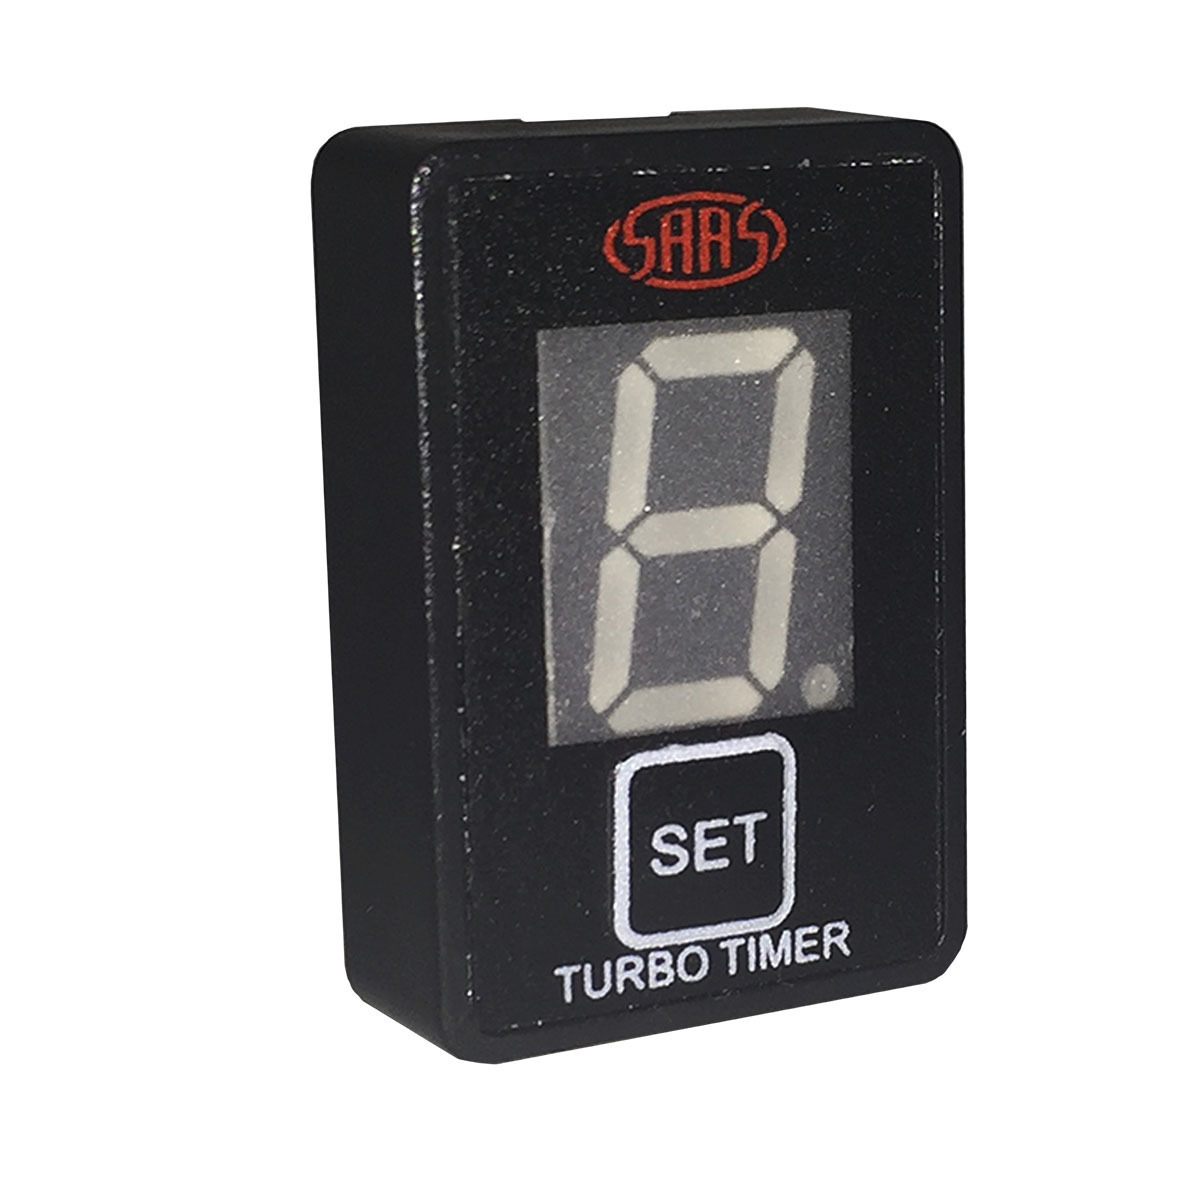 Turbo Timer Digital Switch 9 min Toyota Mount 27.55mm x 13mm